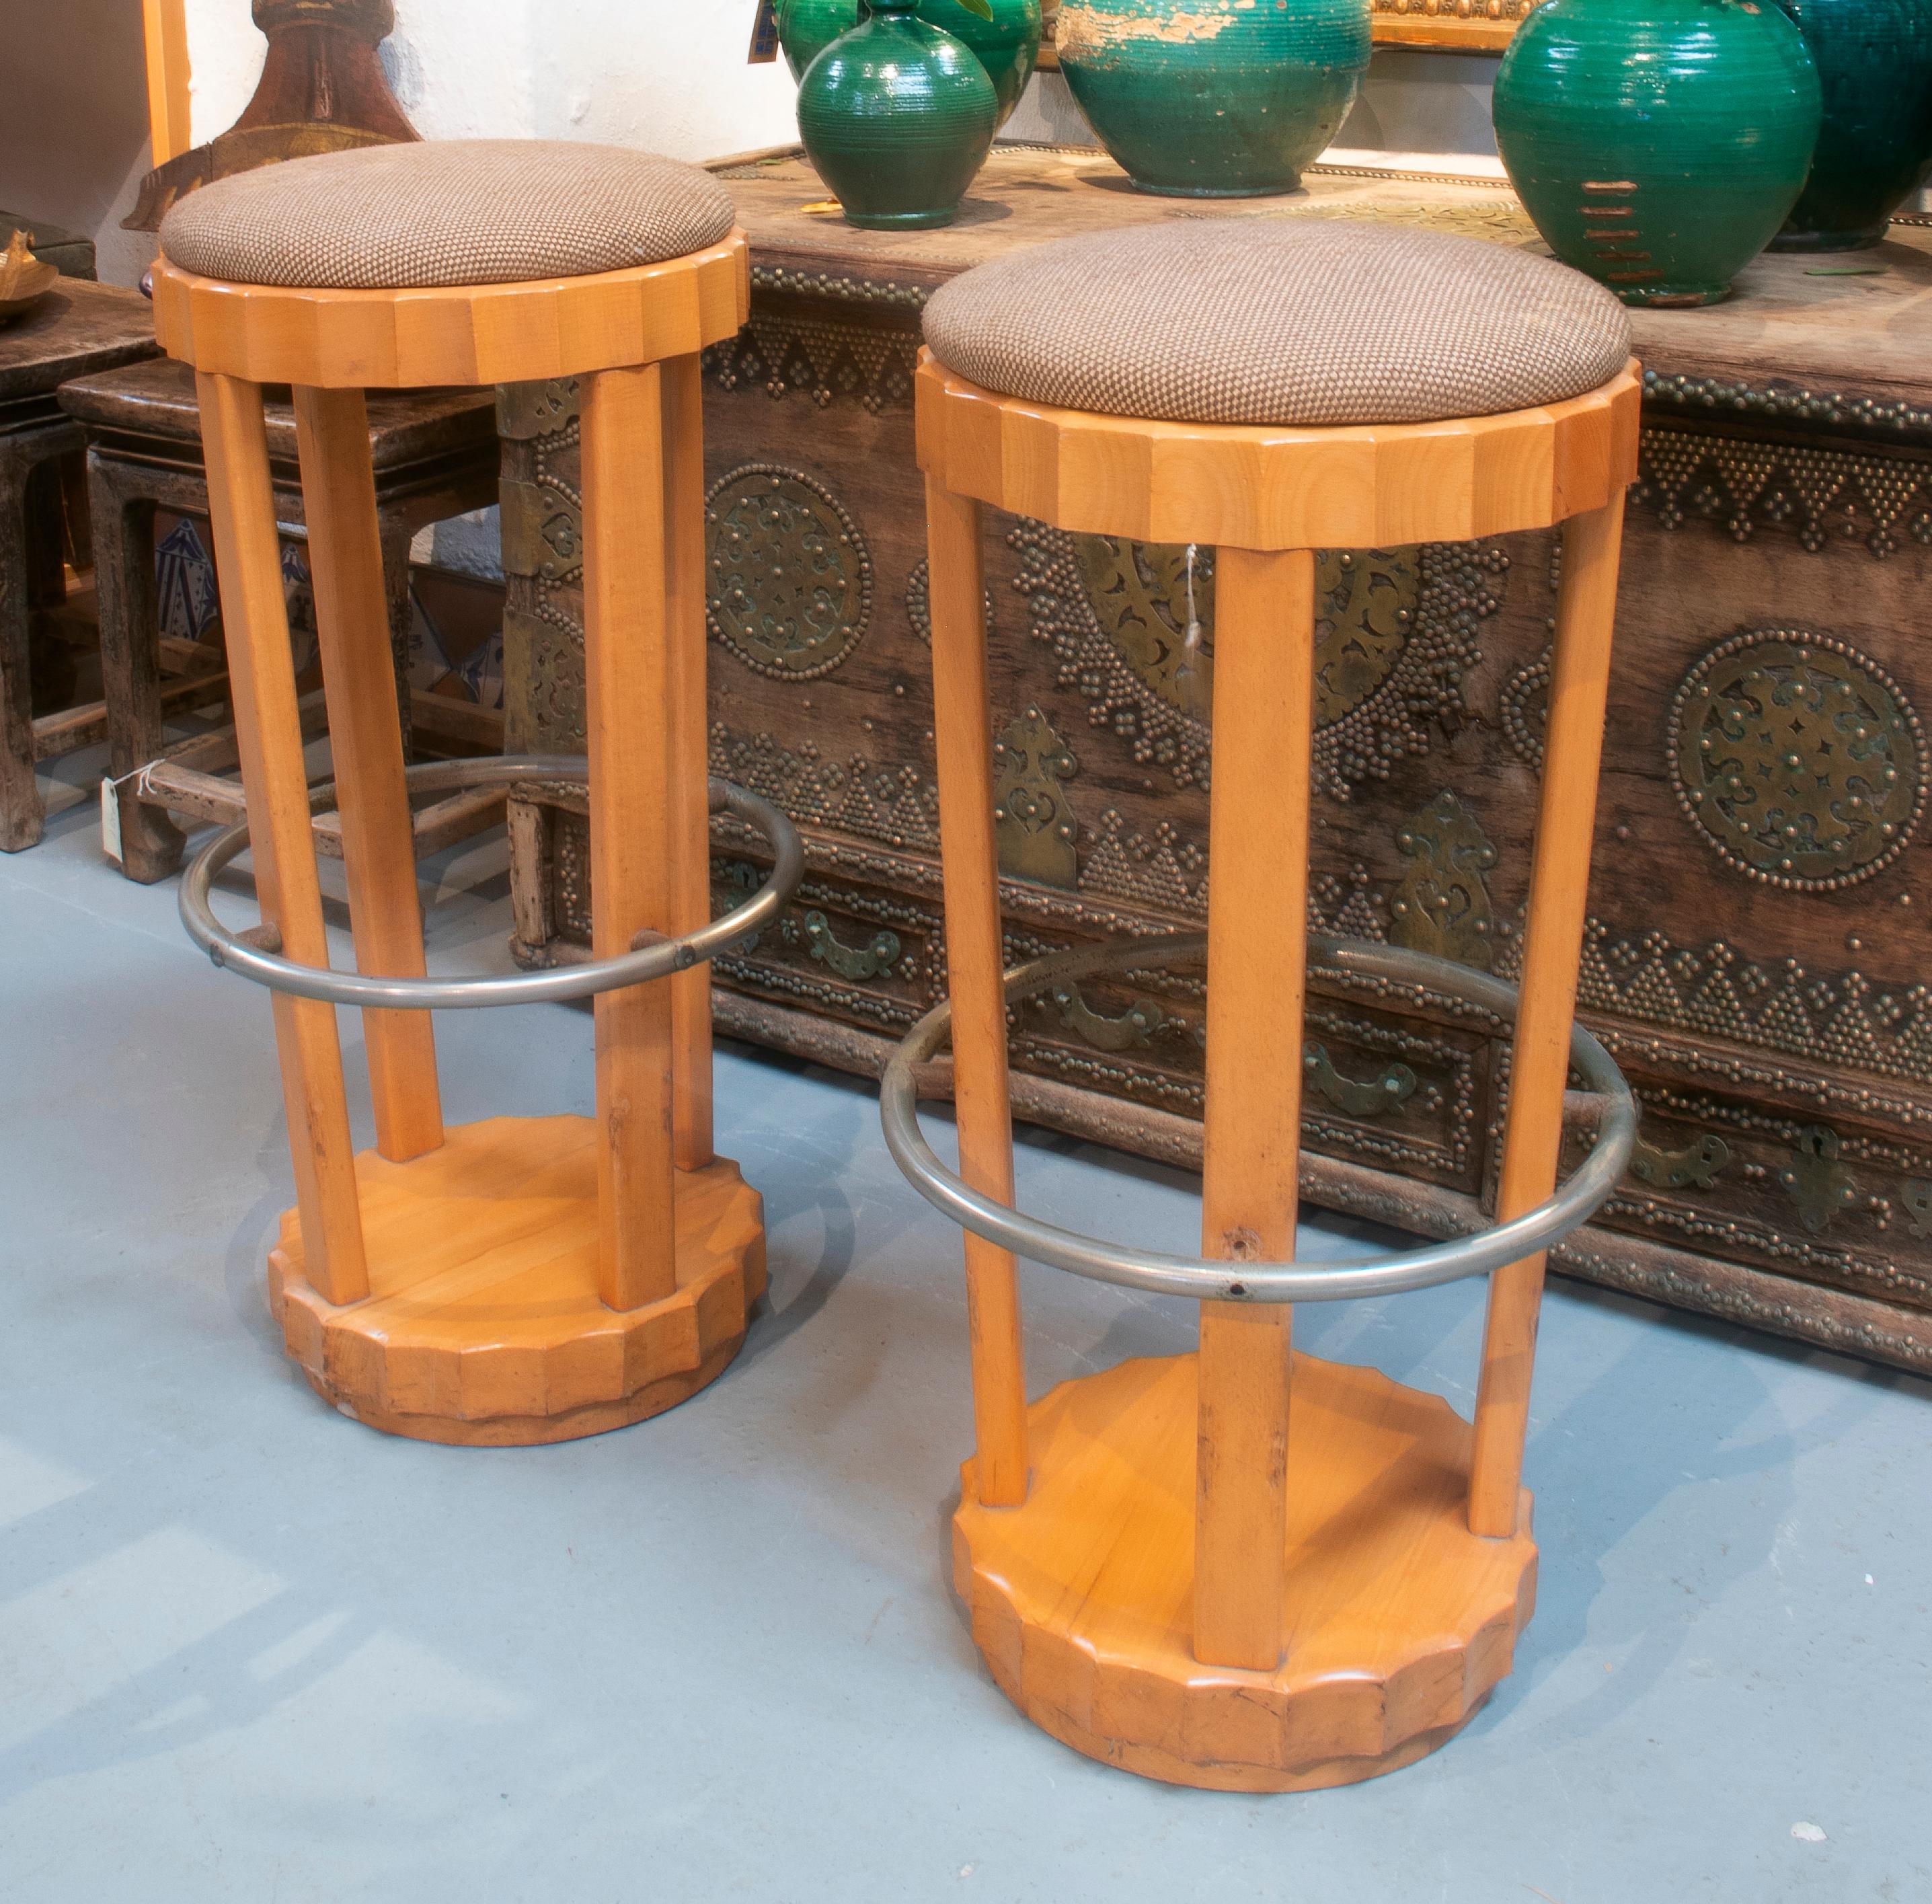 1970s pair of Spanish stools with aluminium foot rests.